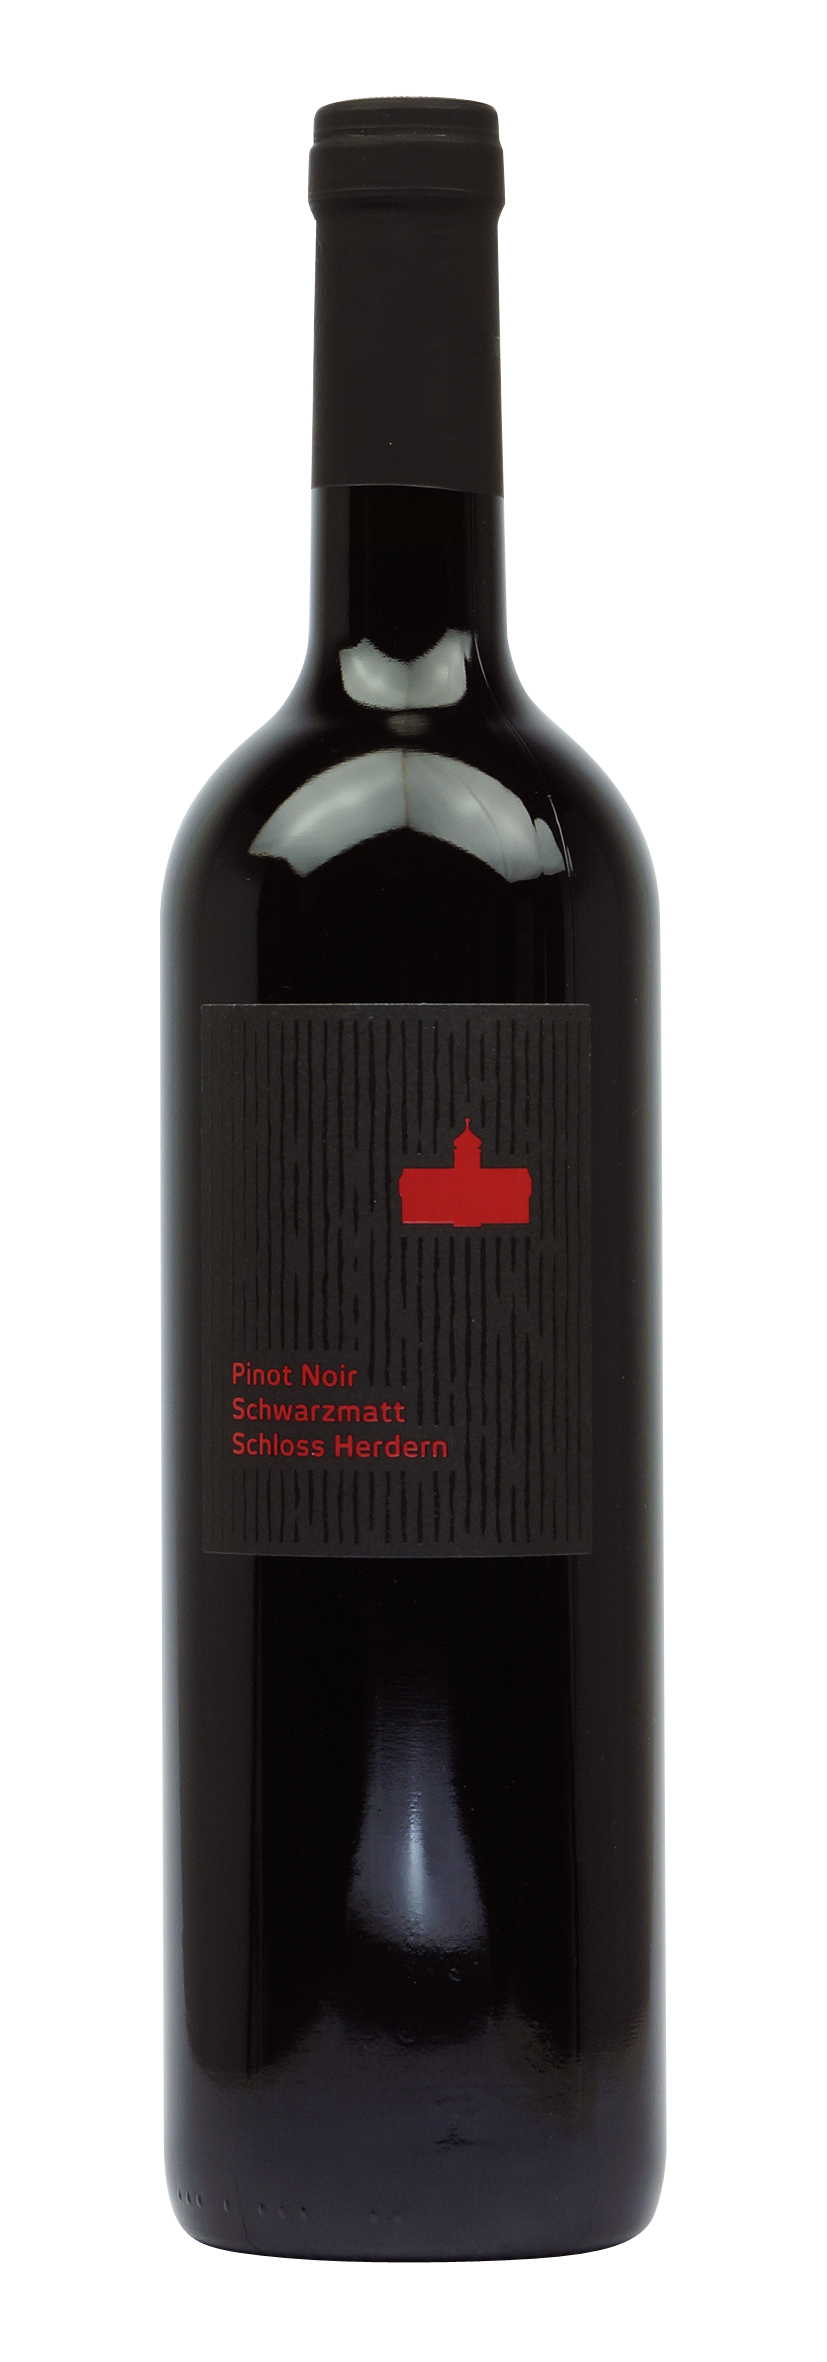 Thurgau AOC  Pinot Noir Schwarzmatt 2015